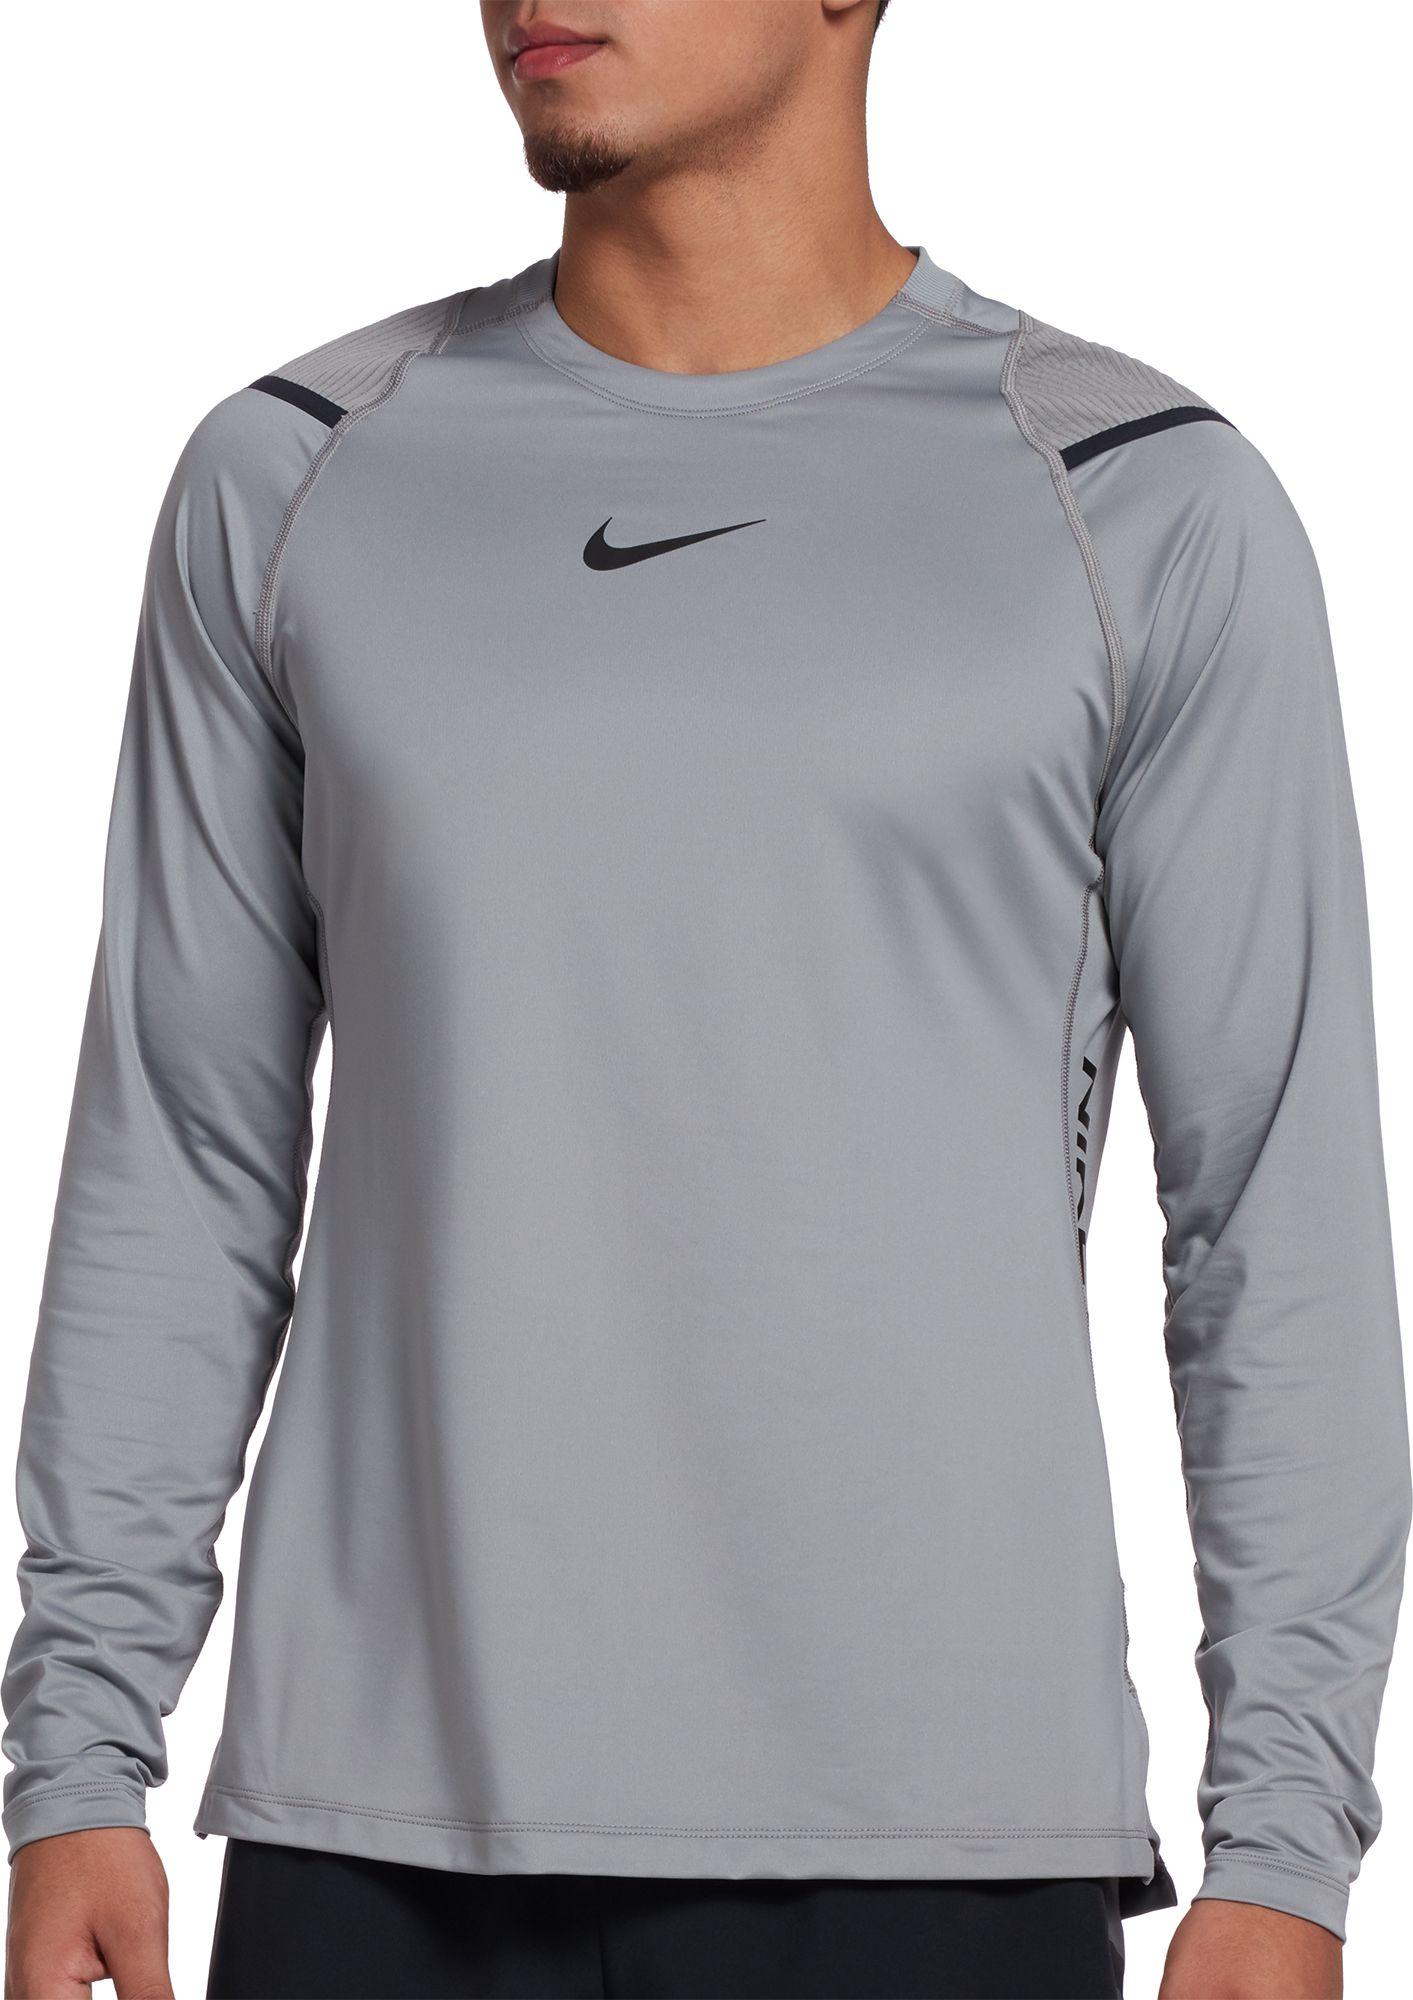 Nike Synthetic Pro Aeroadapt Long Sleeve Shirt in Gray for Men - Lyst